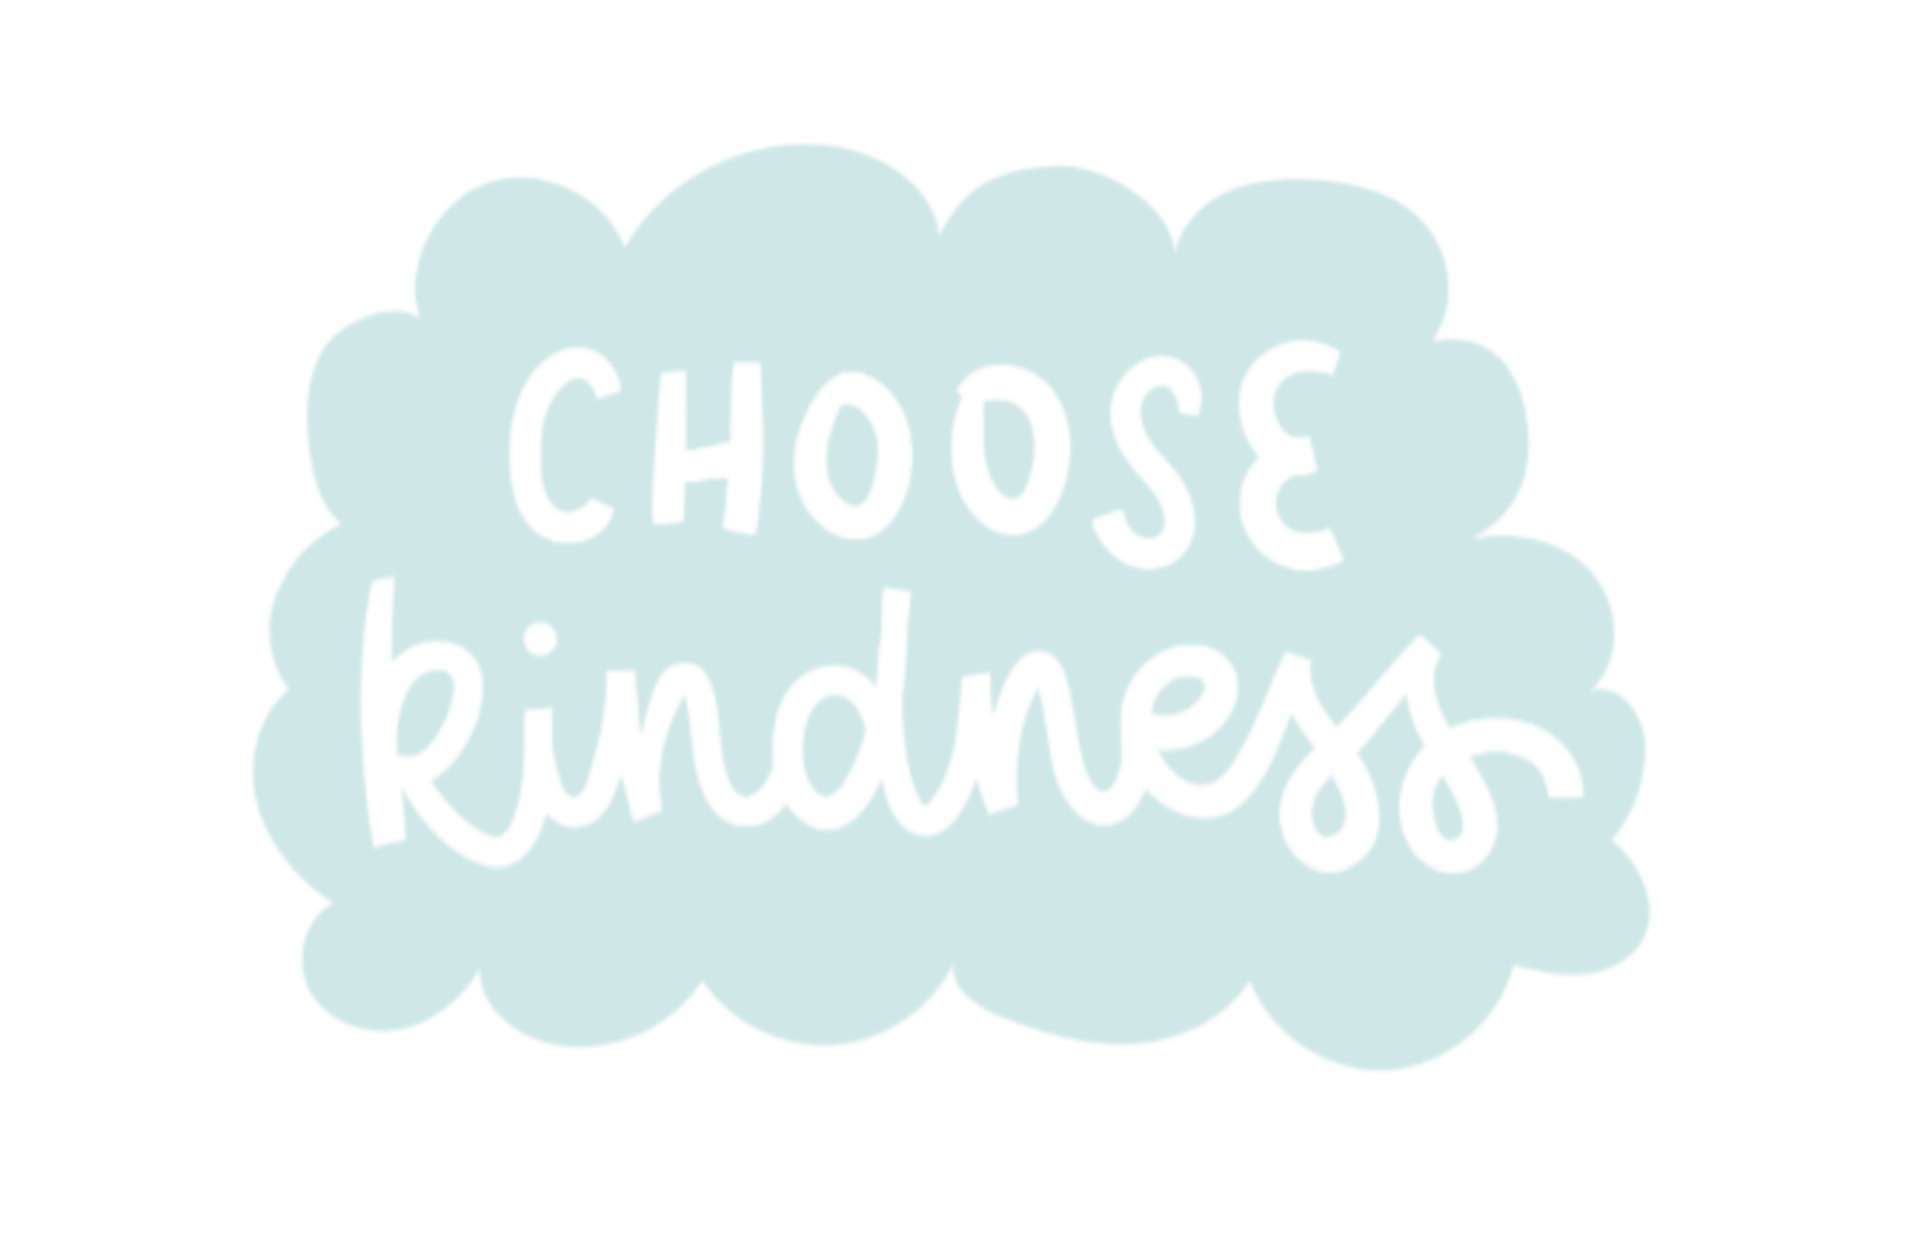 choose kindness